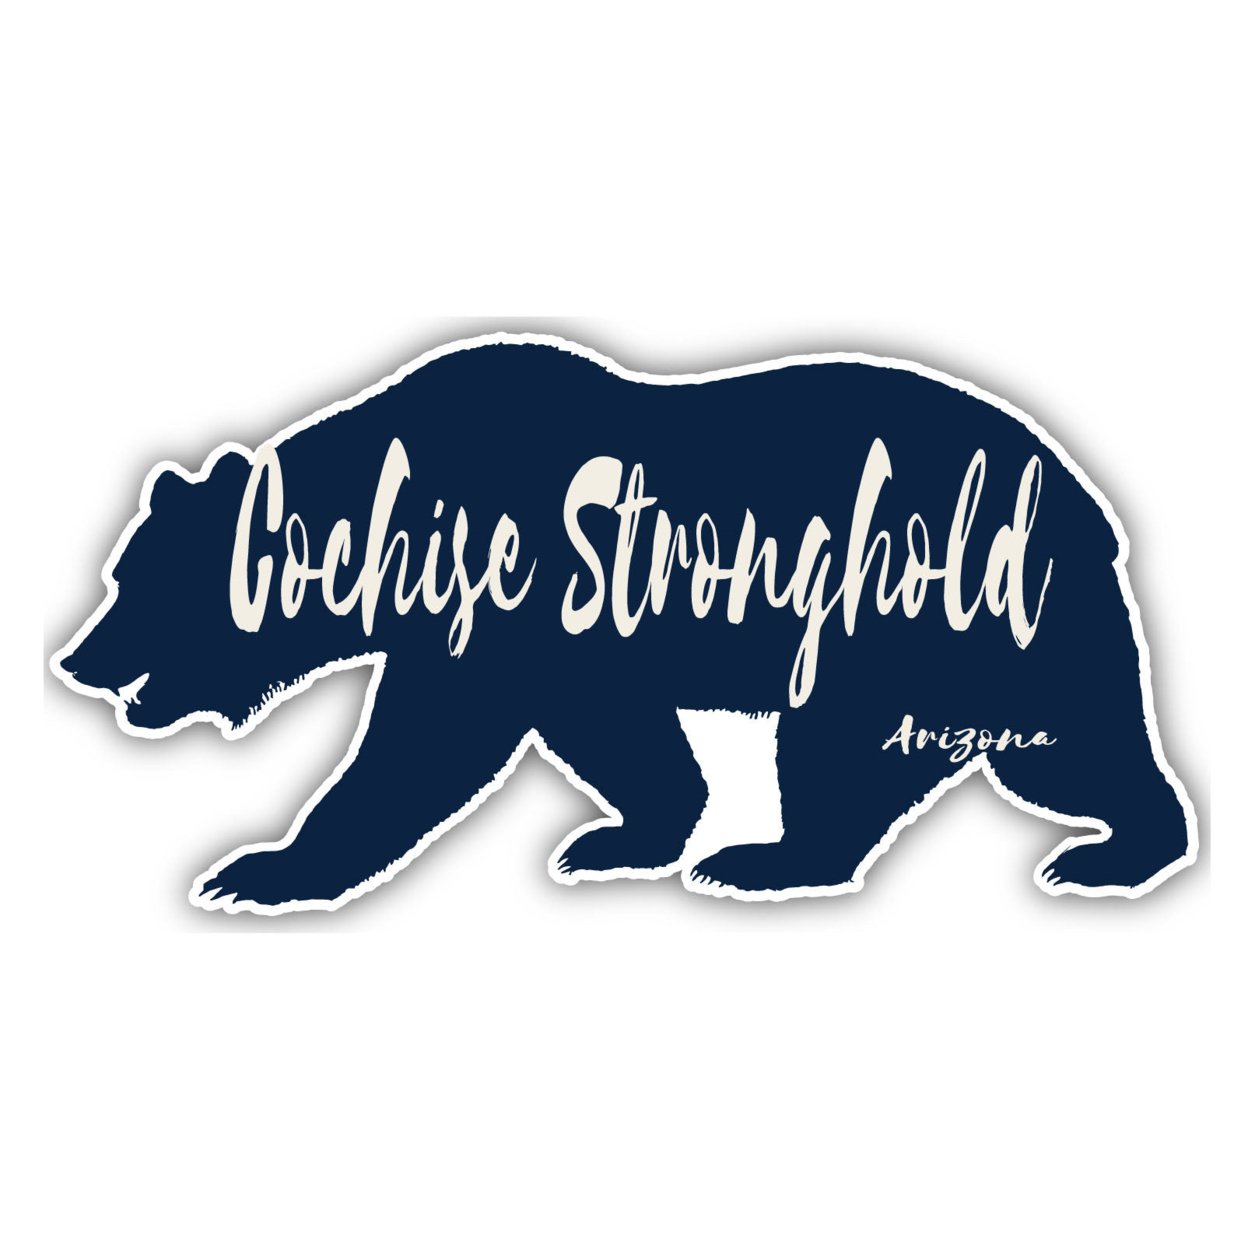 Cochise Stronghold Arizona Souvenir Decorative Stickers (Choose Theme And Size) - Single Unit, 4-Inch, Bear